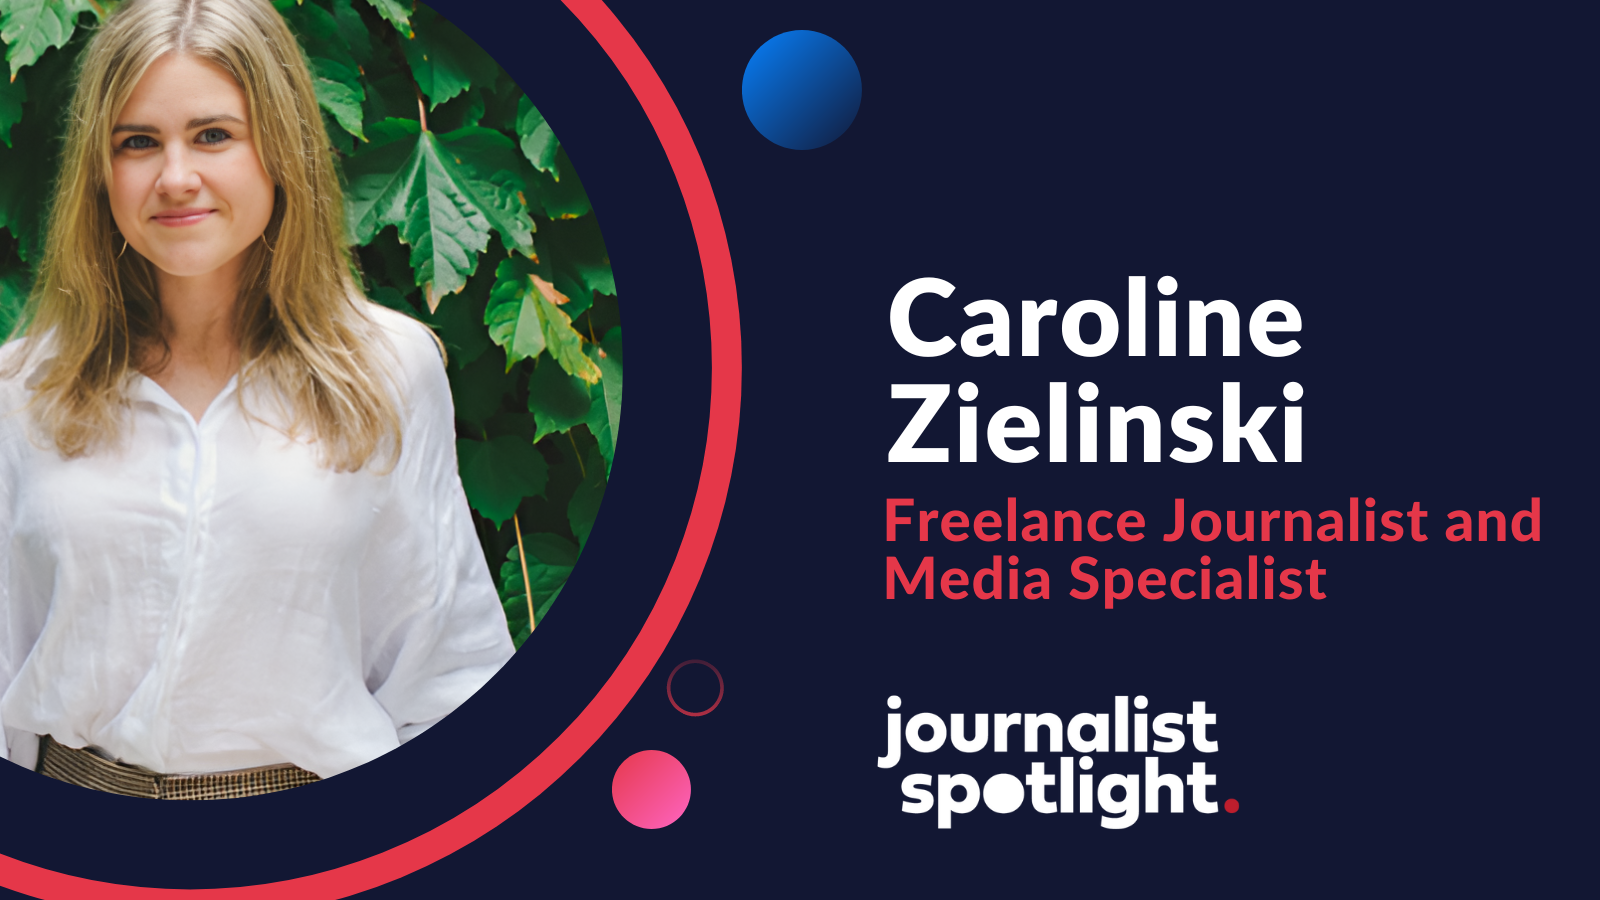 Journalist Spotlight | Interview with Caroline Zielinski, Freelance Journalist and Media Specialist